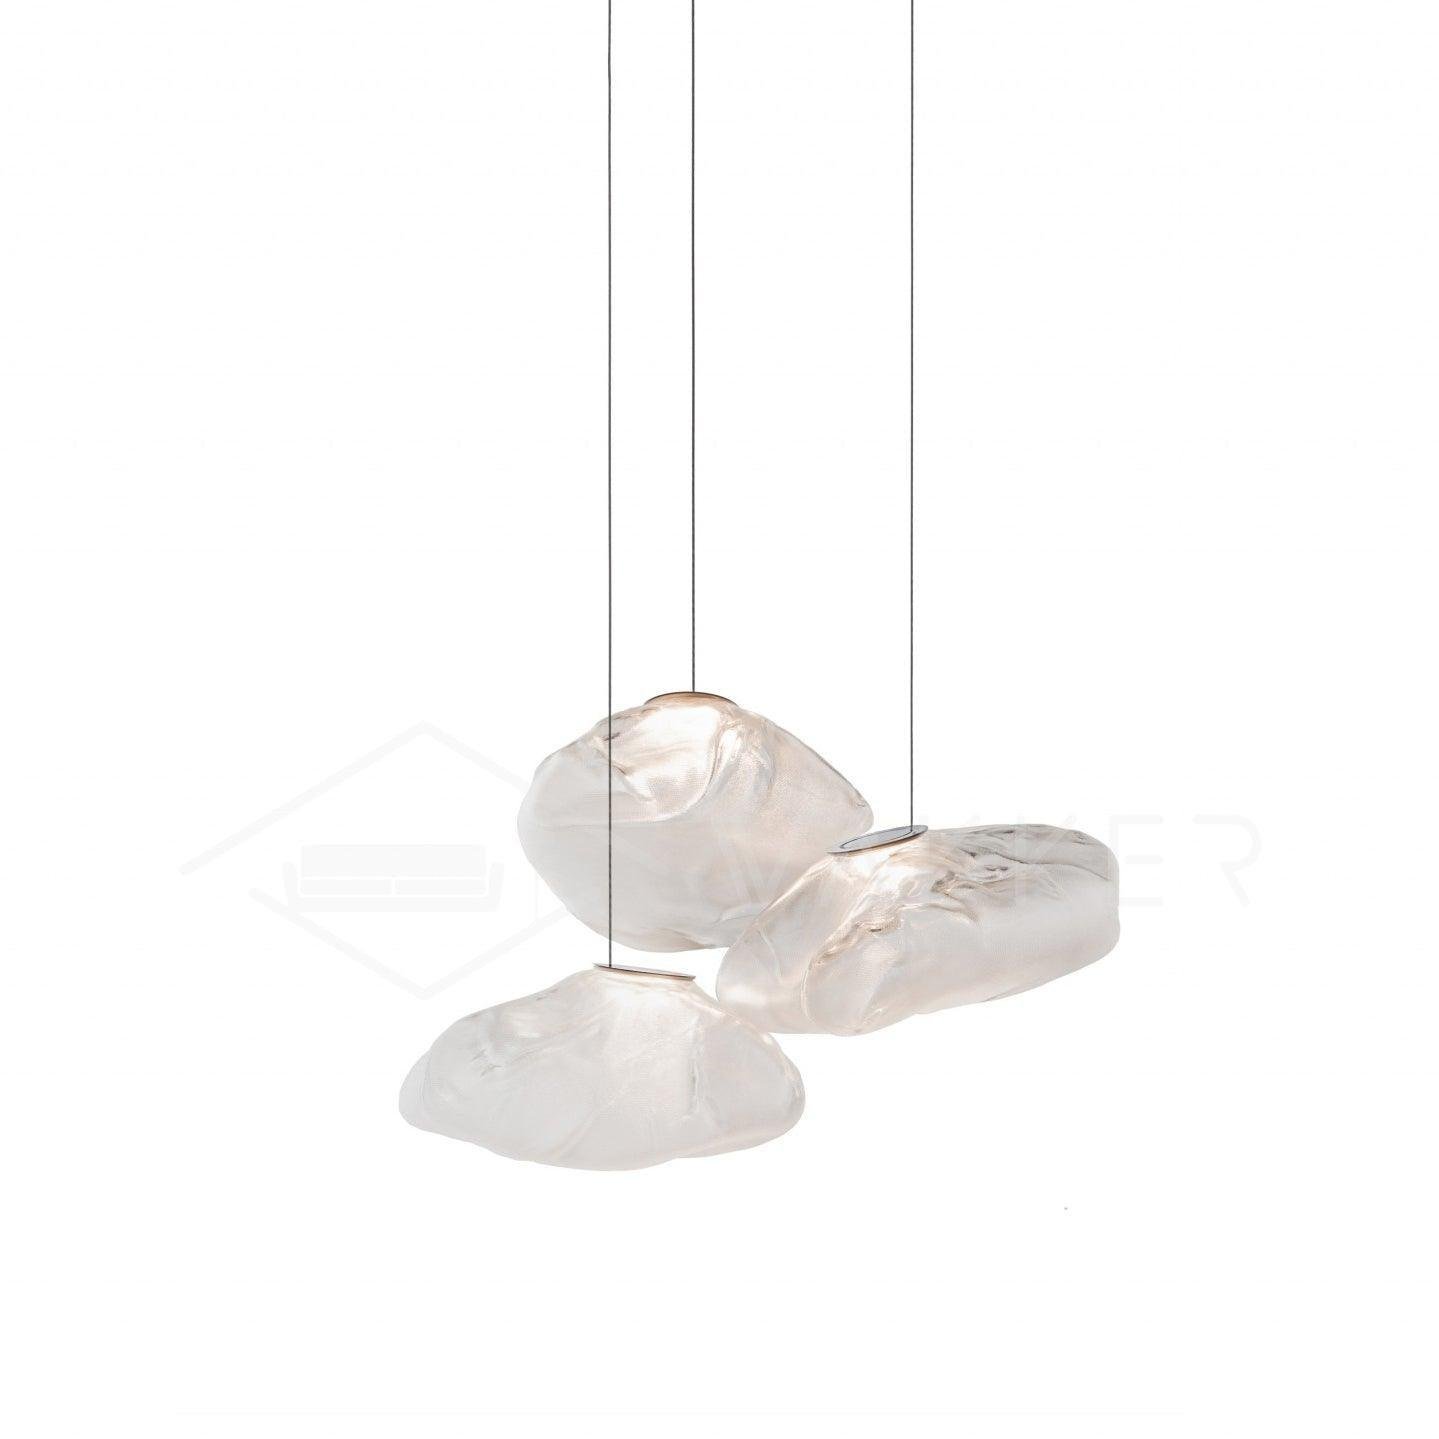 Modern Pendant Light with 3 Transparent Glass Heads, 20cm Diameter, and Round Canopy Design